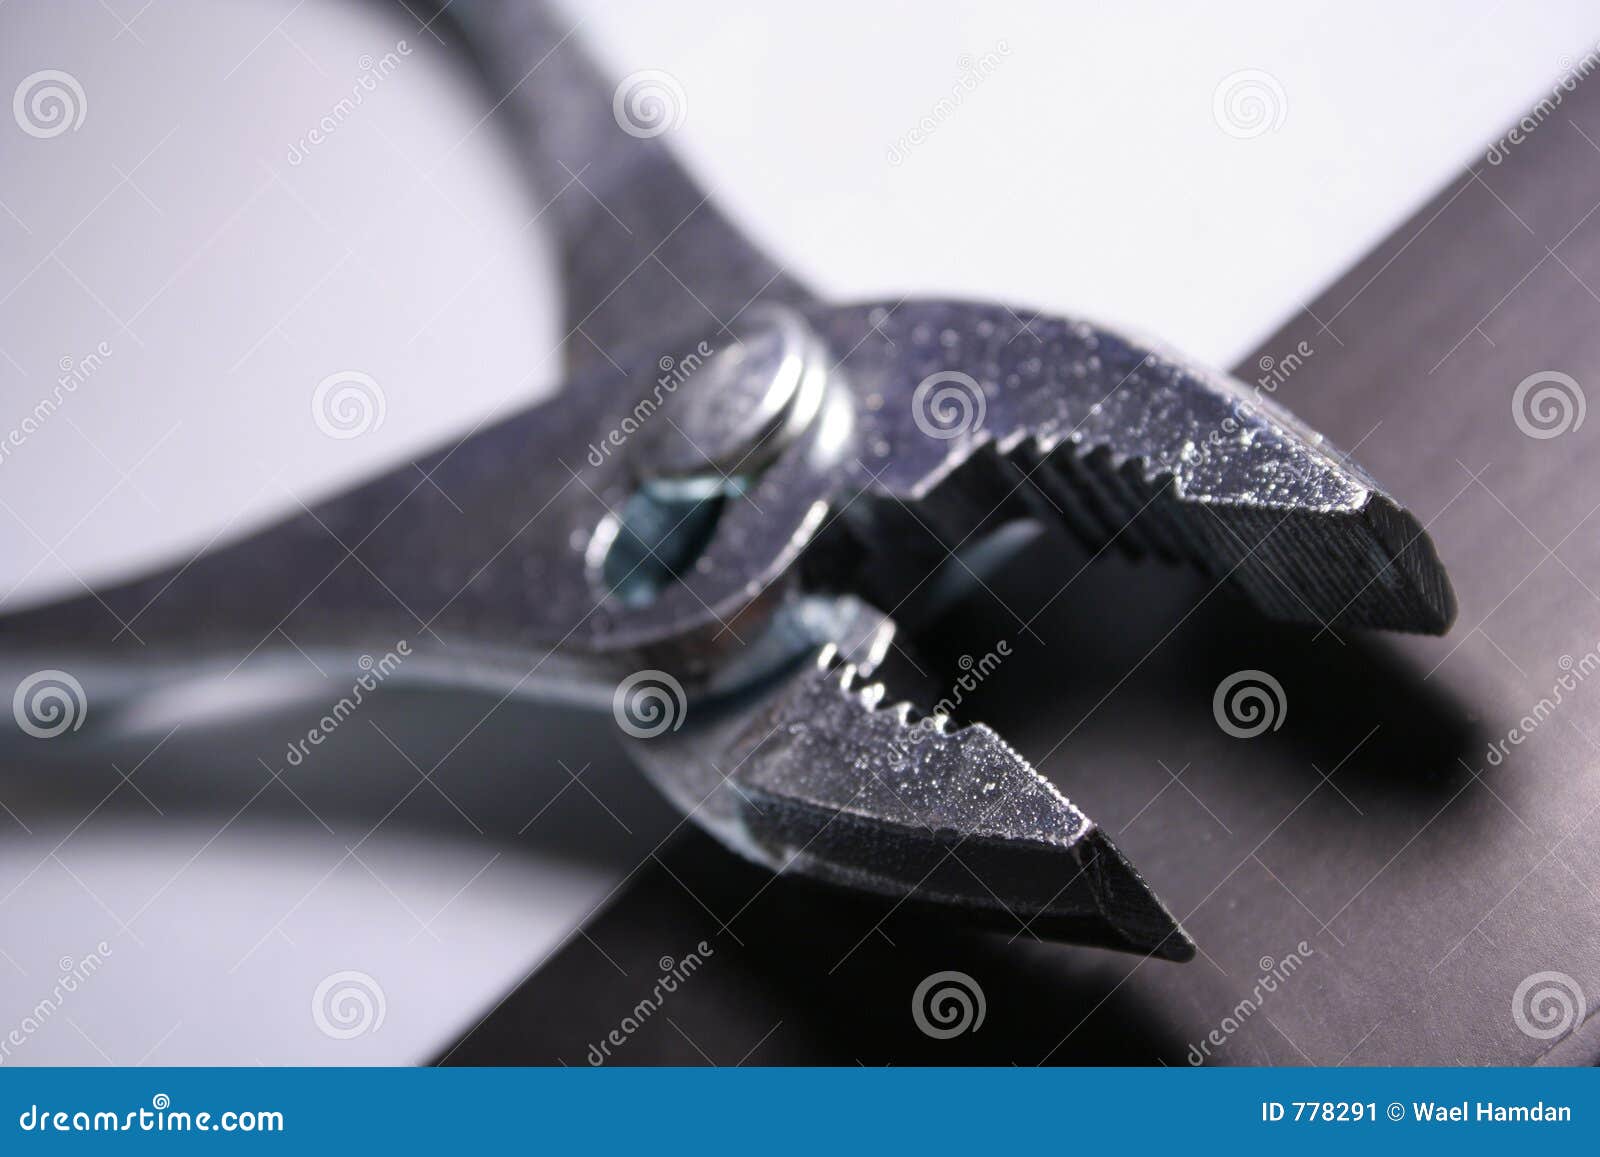 plier tool close-up